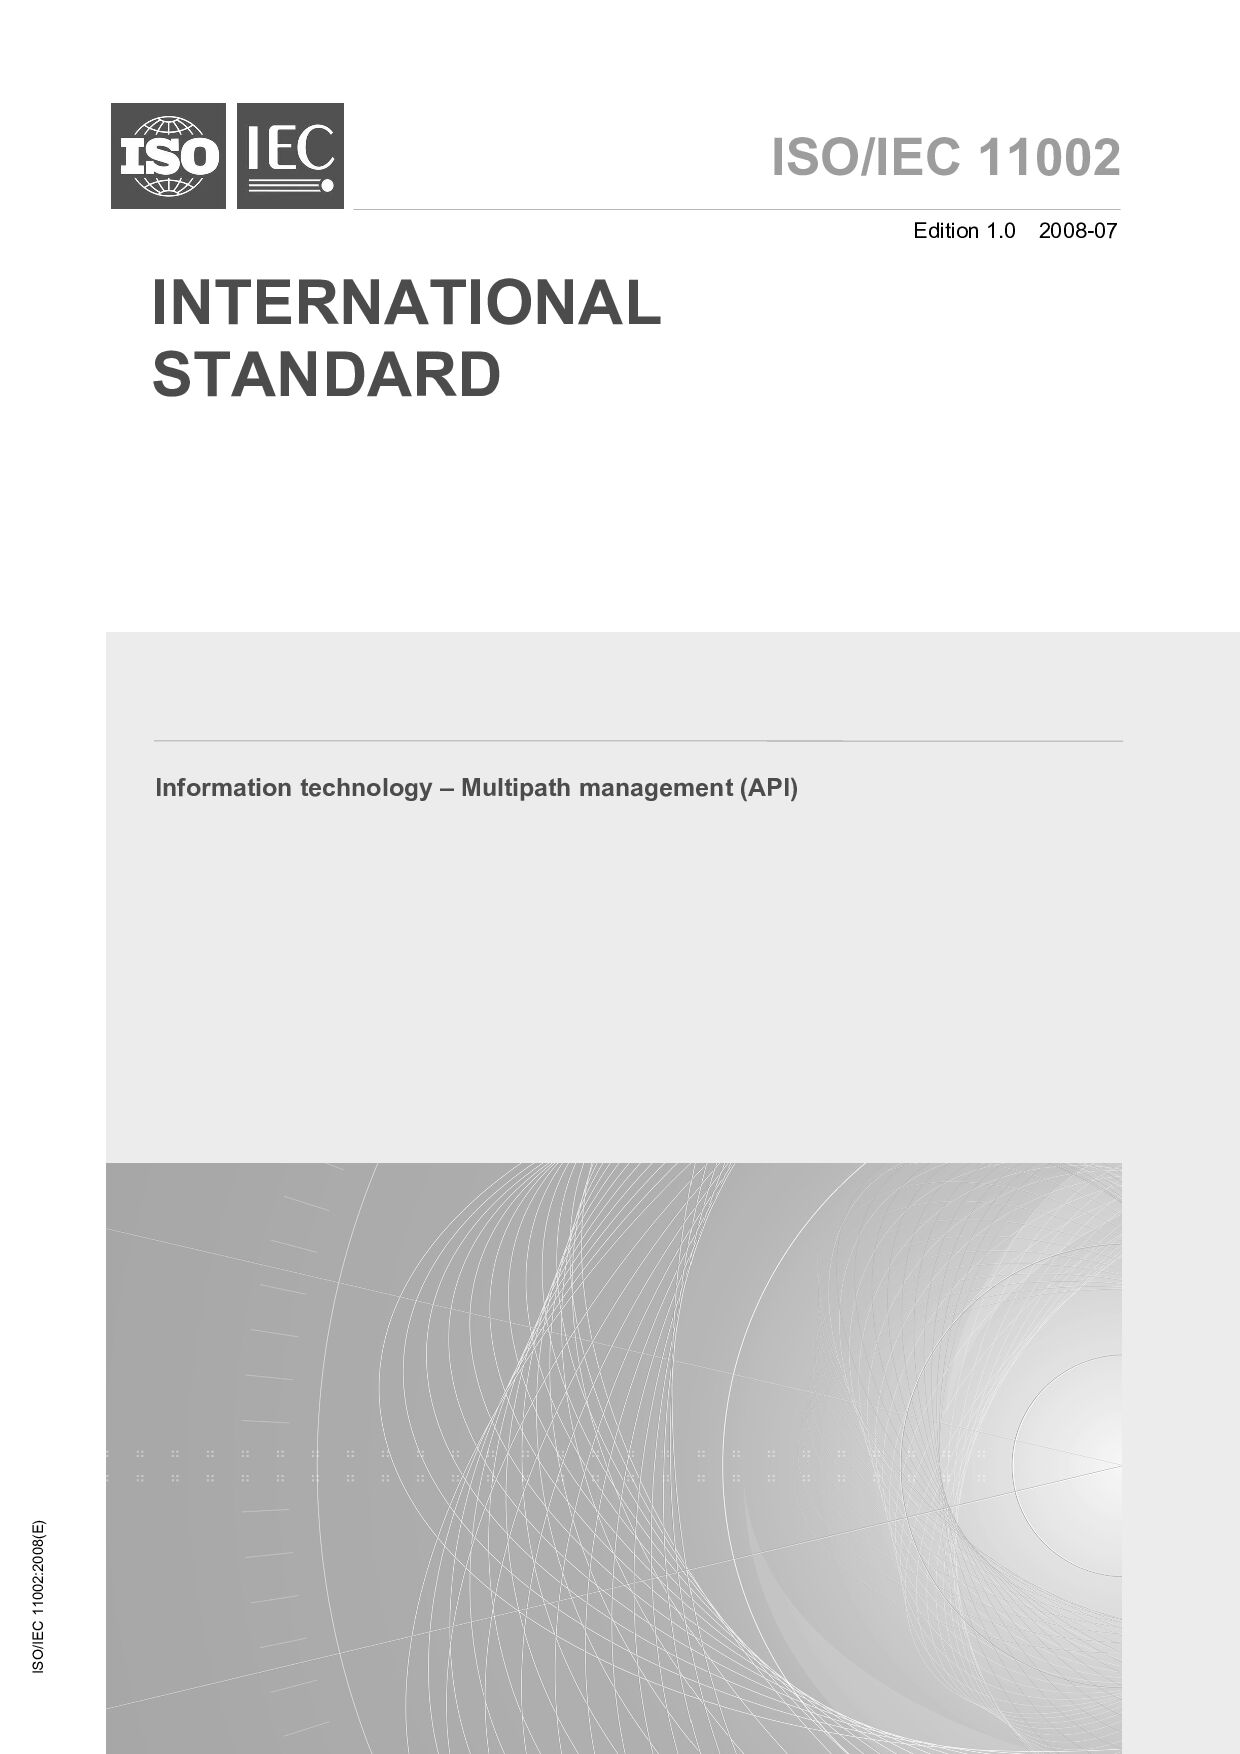 ISO/IEC 11002:2008